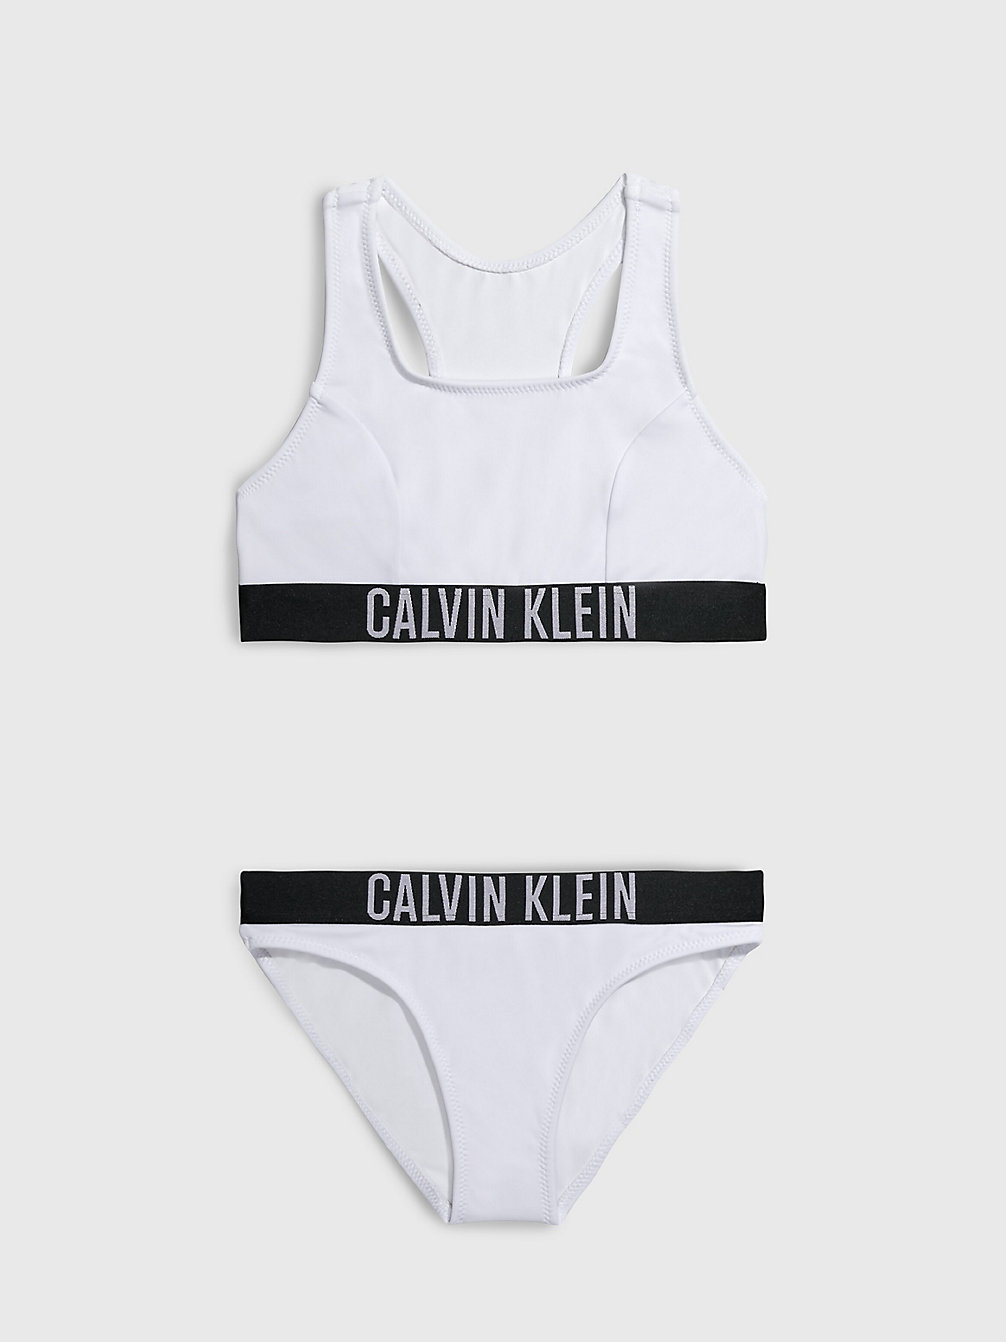 PVH CLASSIC WHITE Meisjesbralette Bikini - Intense Power undefined girls Calvin Klein